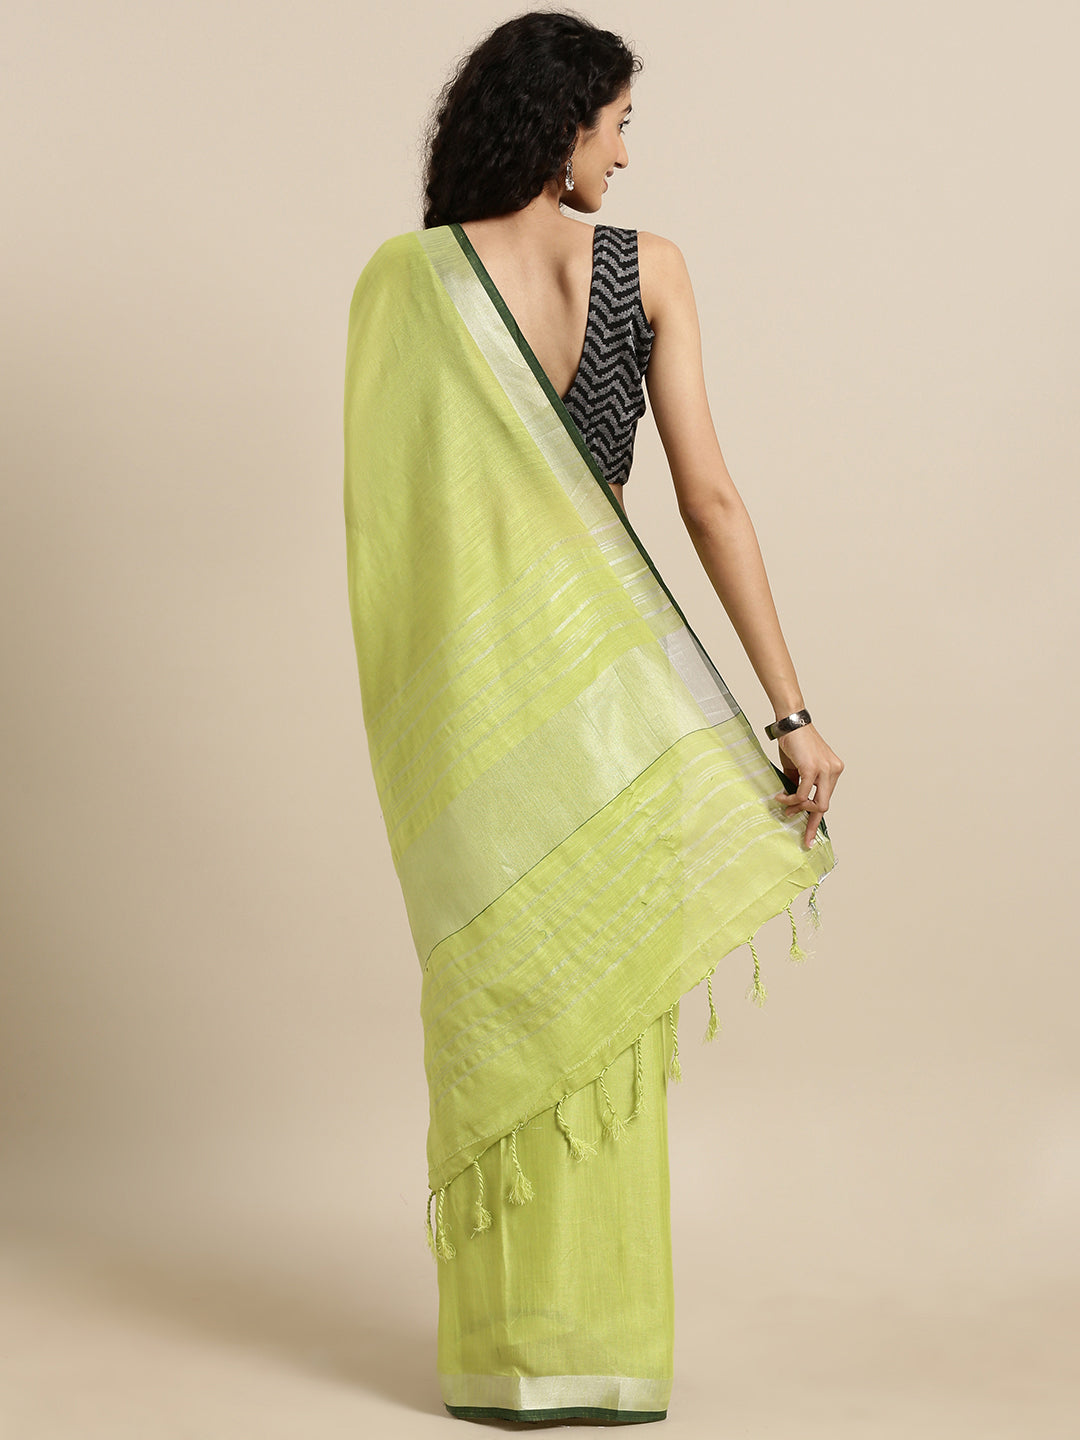  Exclusive Solid Linen Saree With Zari Border